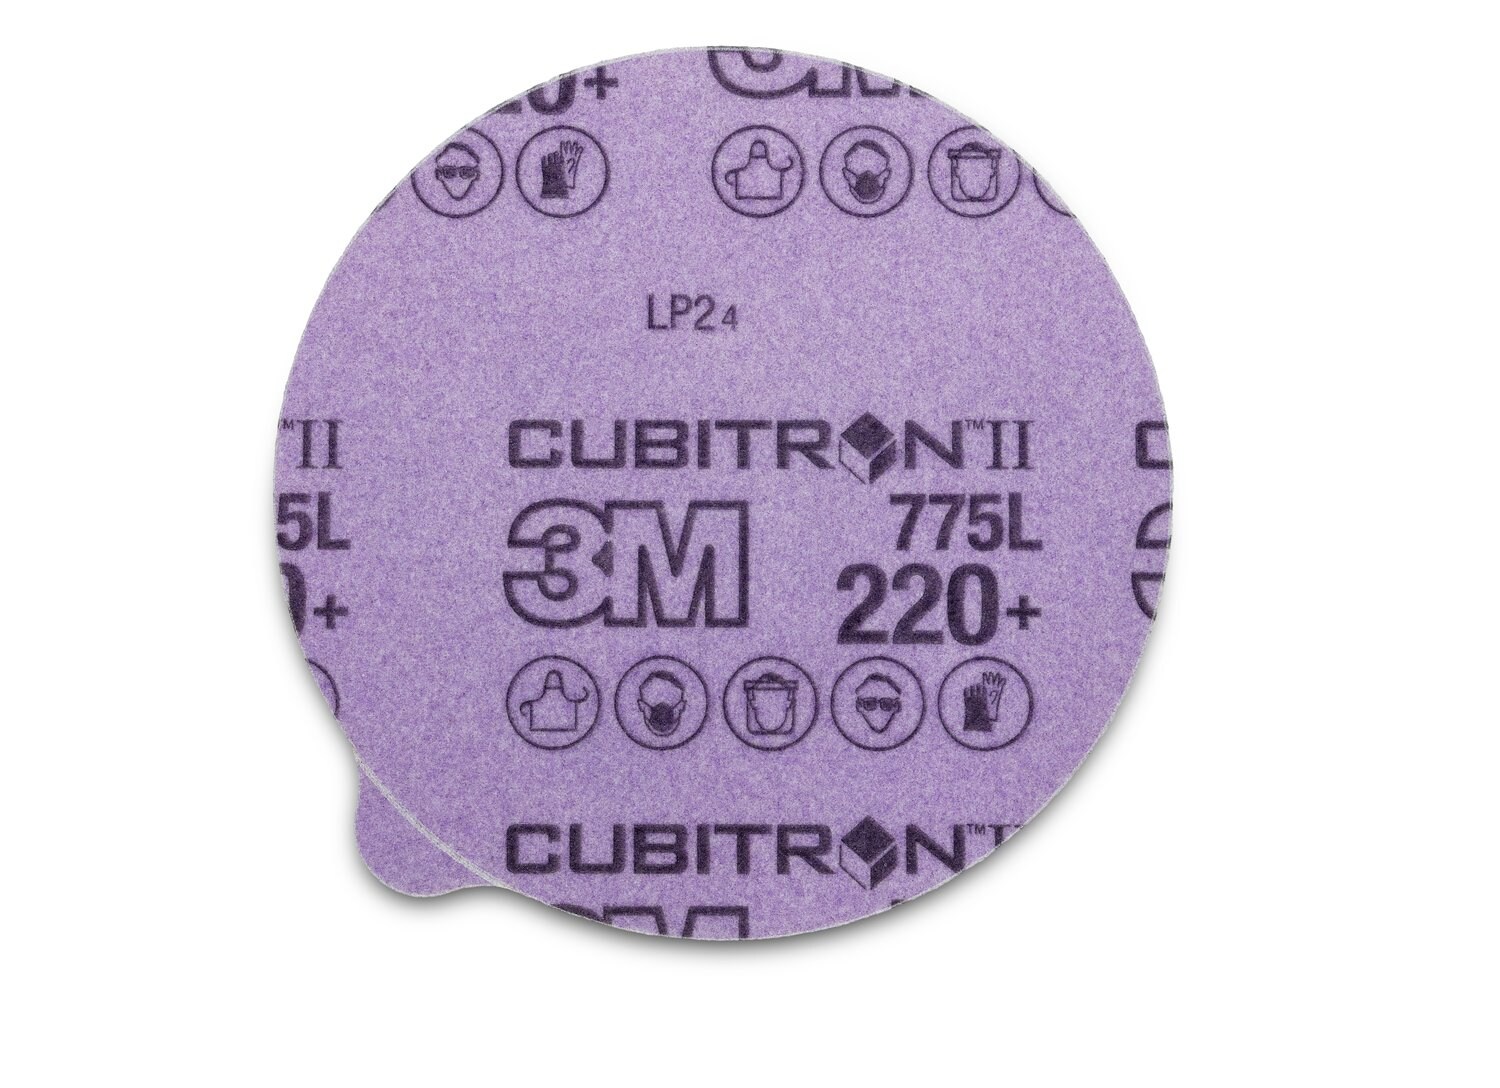 7100075221 - 3M Cubitron II Stikit Film Disc 775L, 220+, 6 in x NH, Linered w/Tab,
Die 600Z, 50/Carton, 250 ea/Case